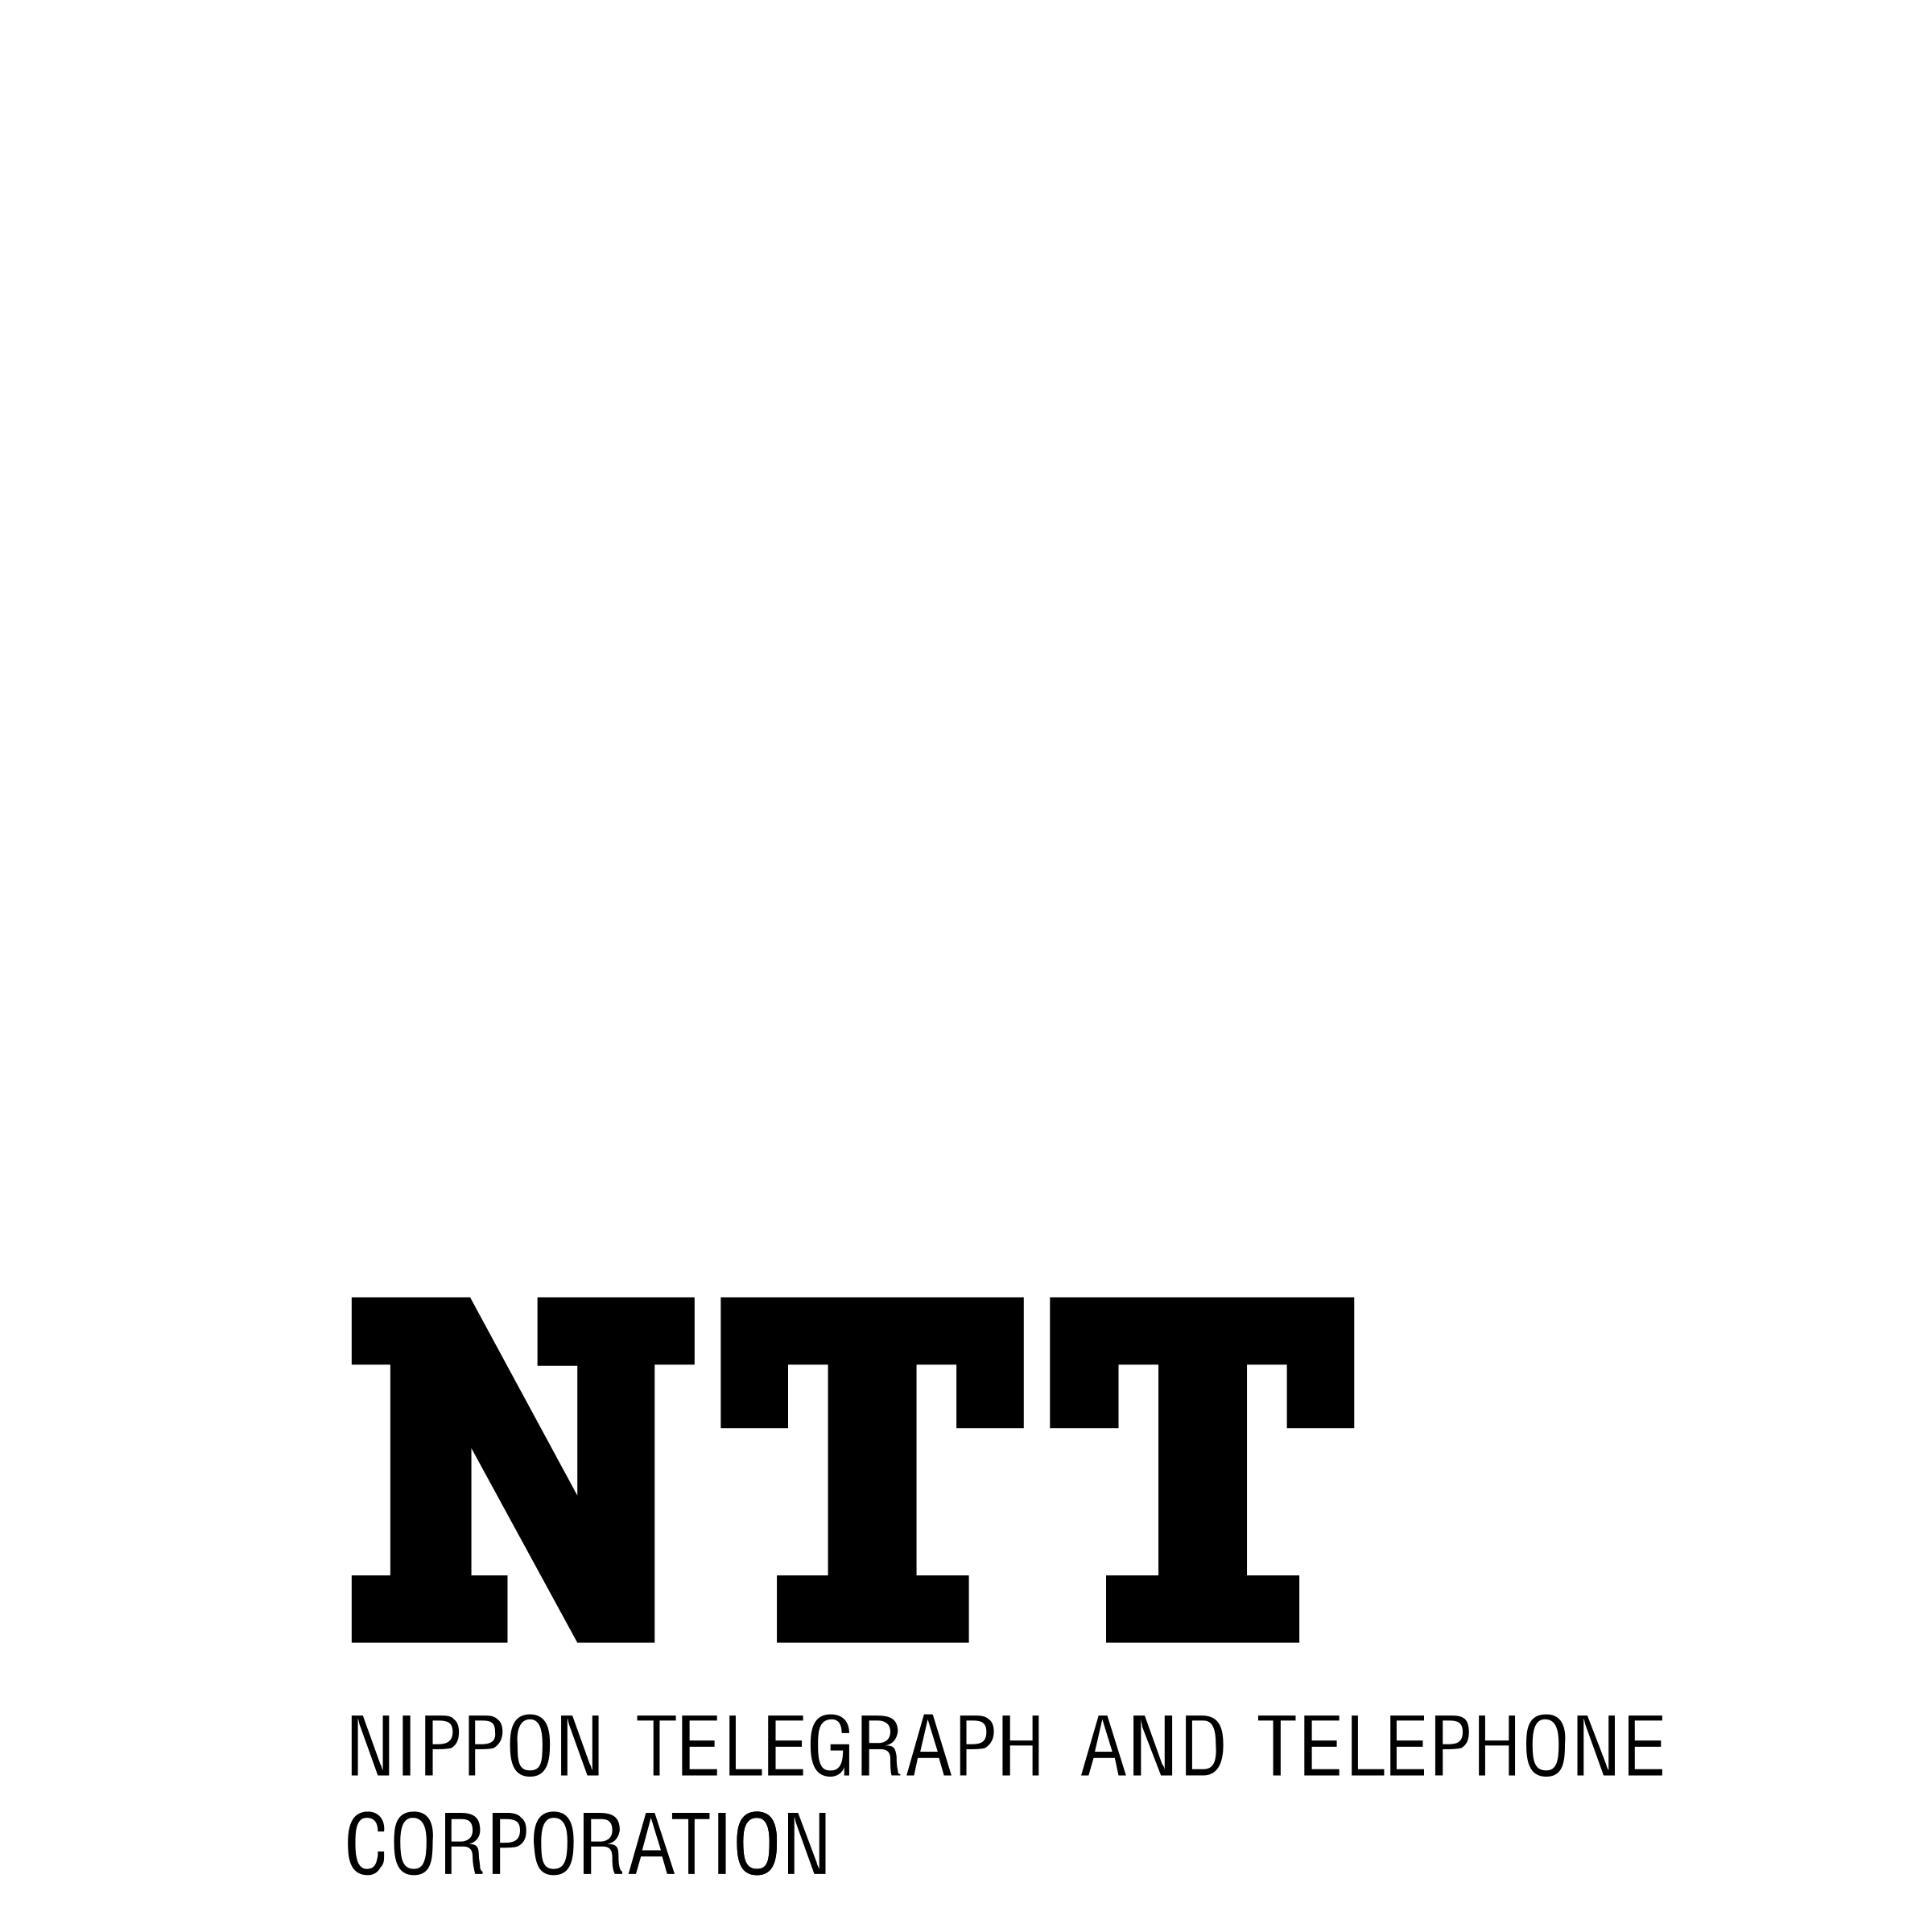 NTT Logo - NTT Logo PNG Transparent & SVG Vector - Freebie Supply